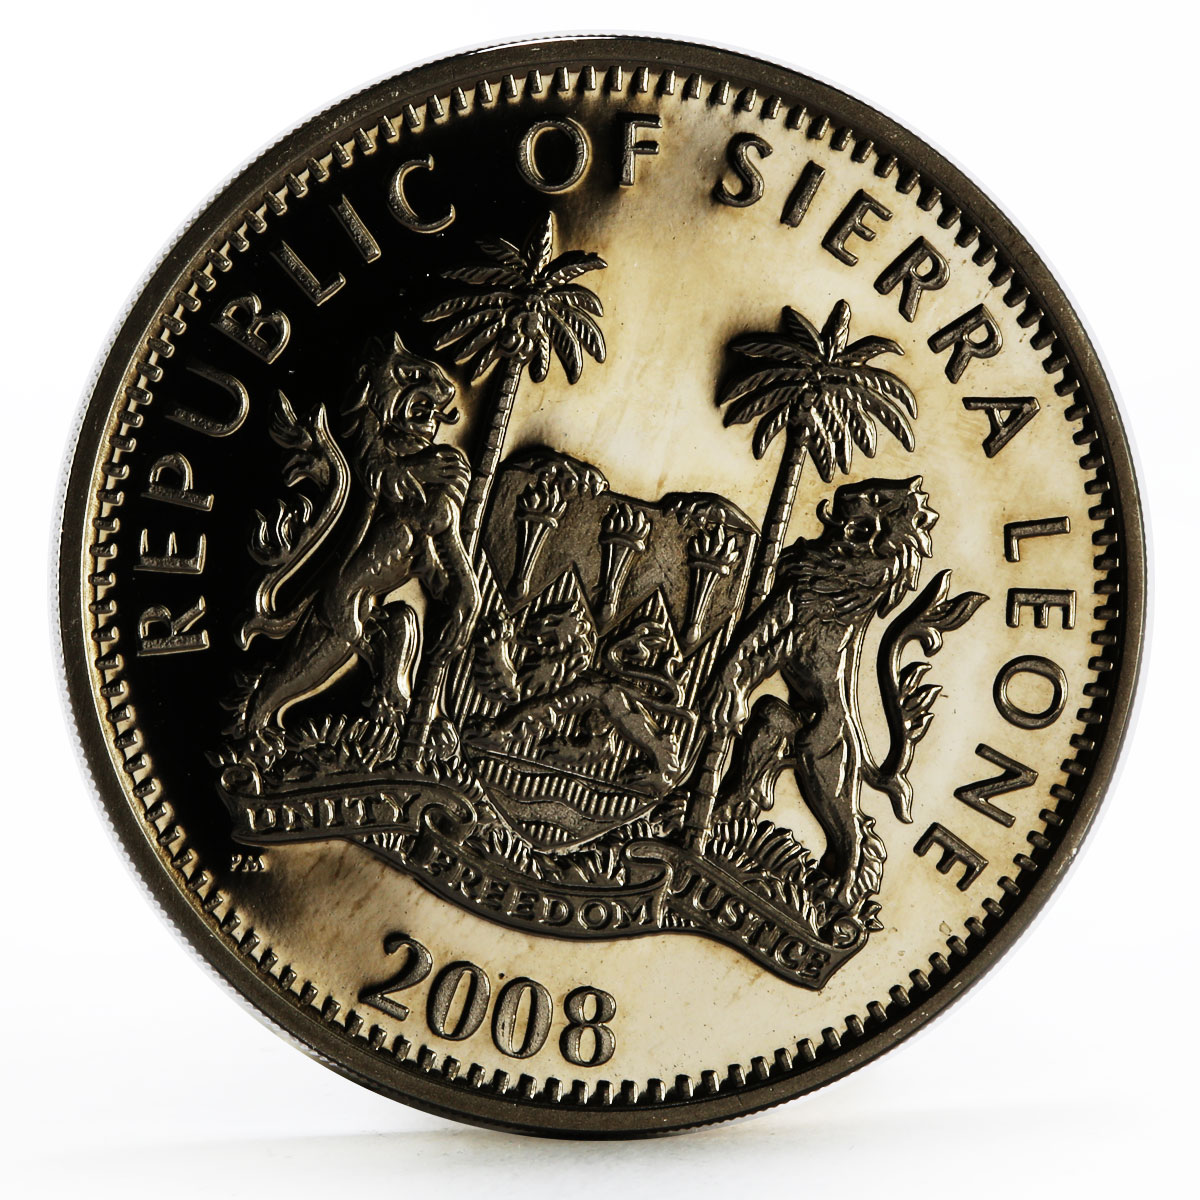 Sierra Leone 10 dollars Nocturnal Animals series Bush Baby silver coin 2008